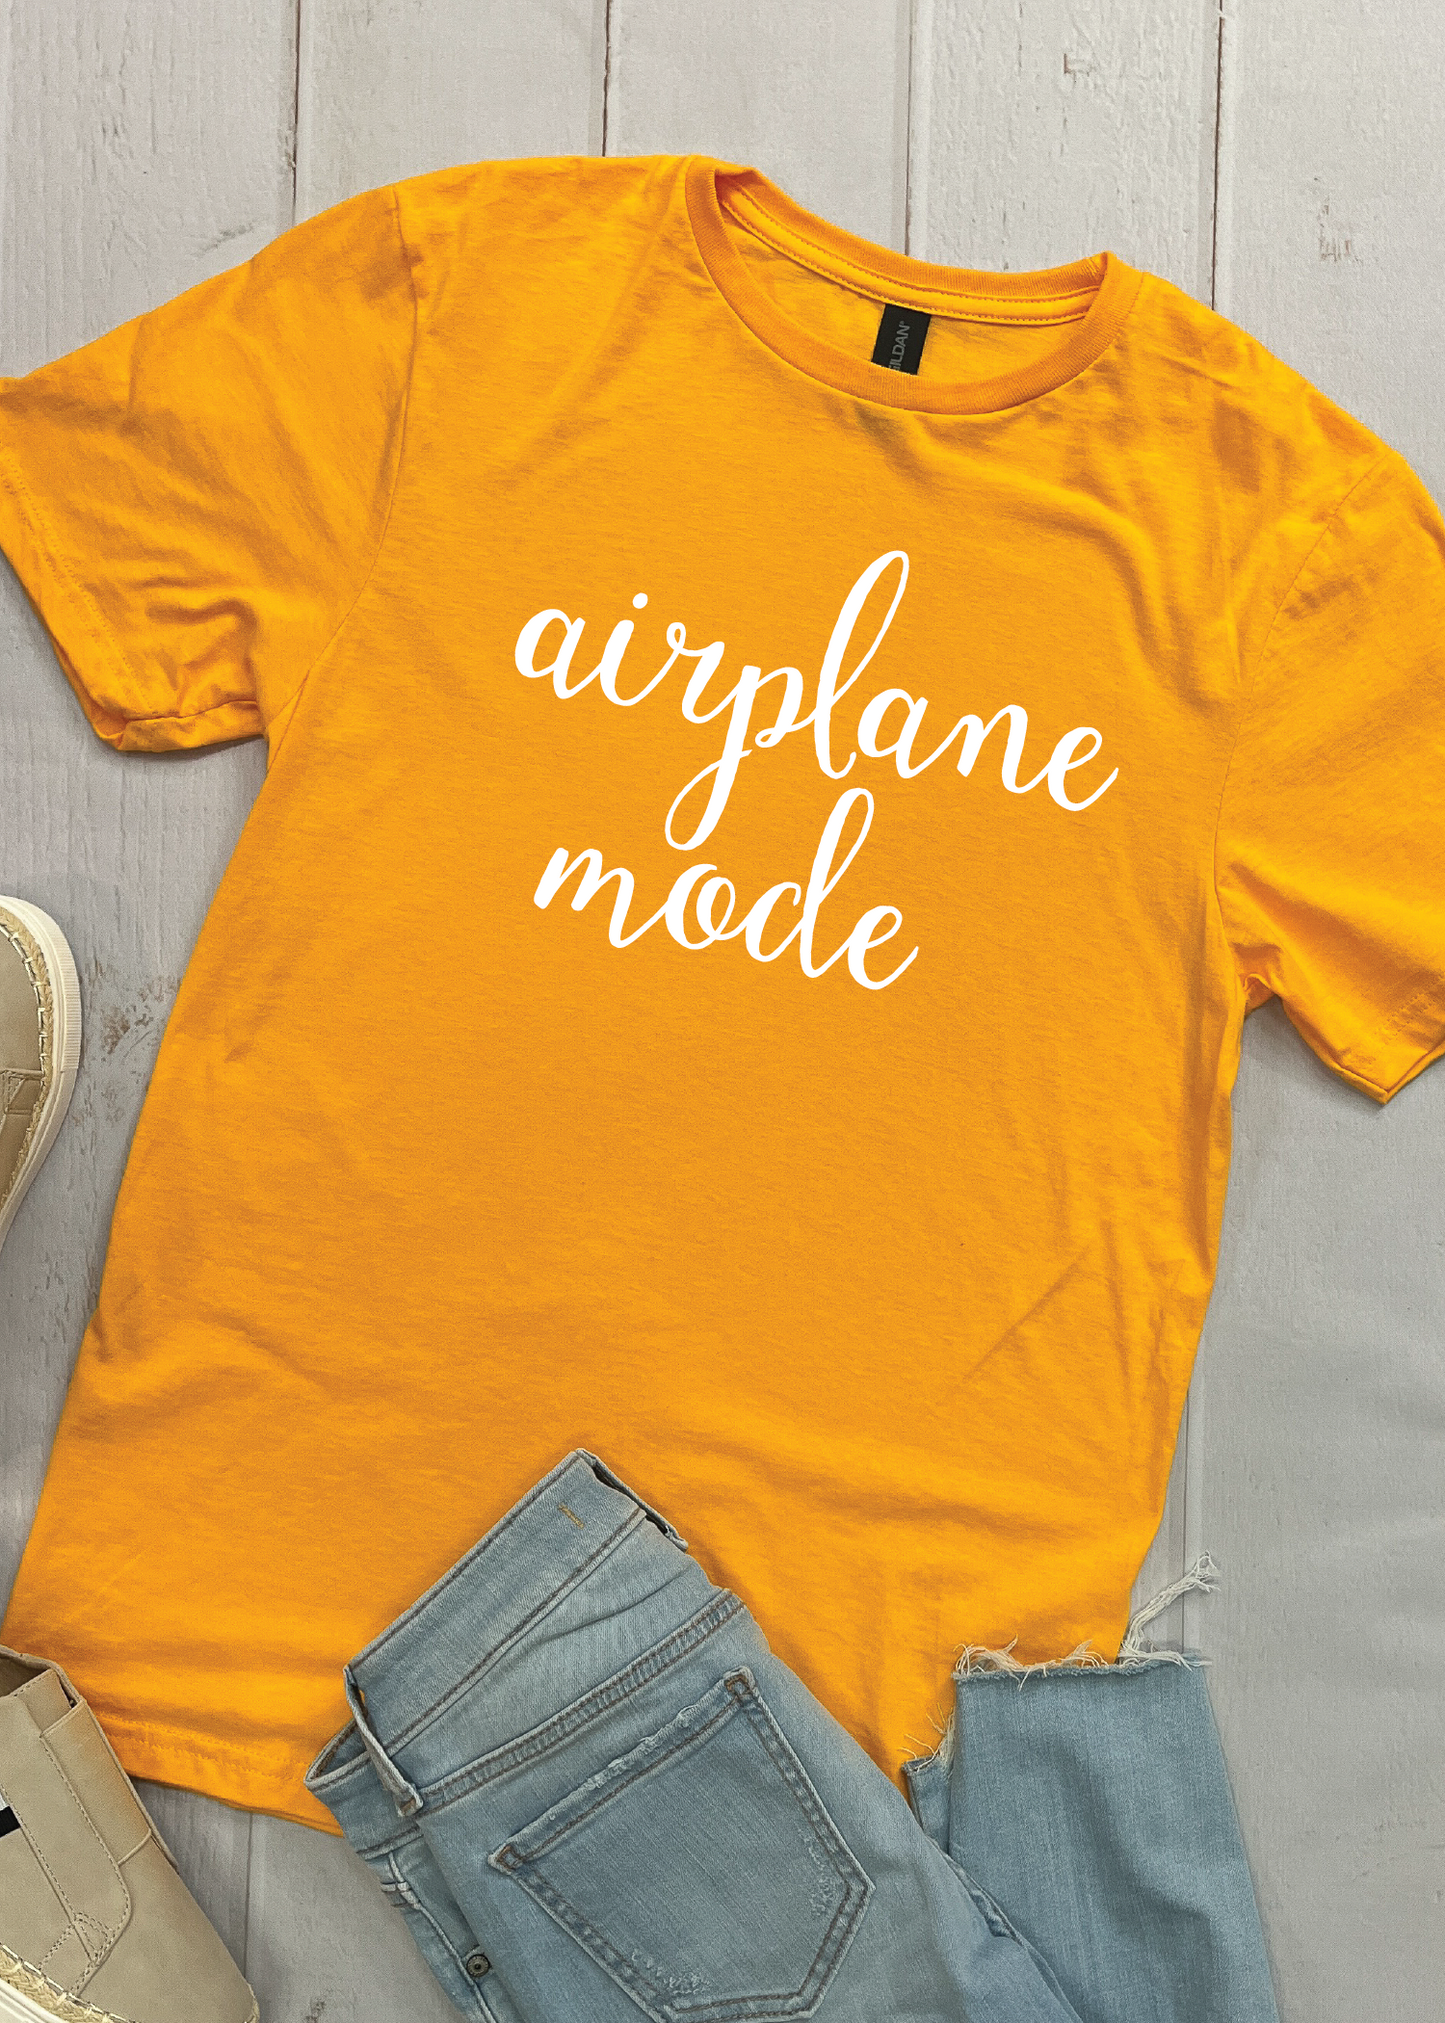 Airplane Mode - Graphic Tee